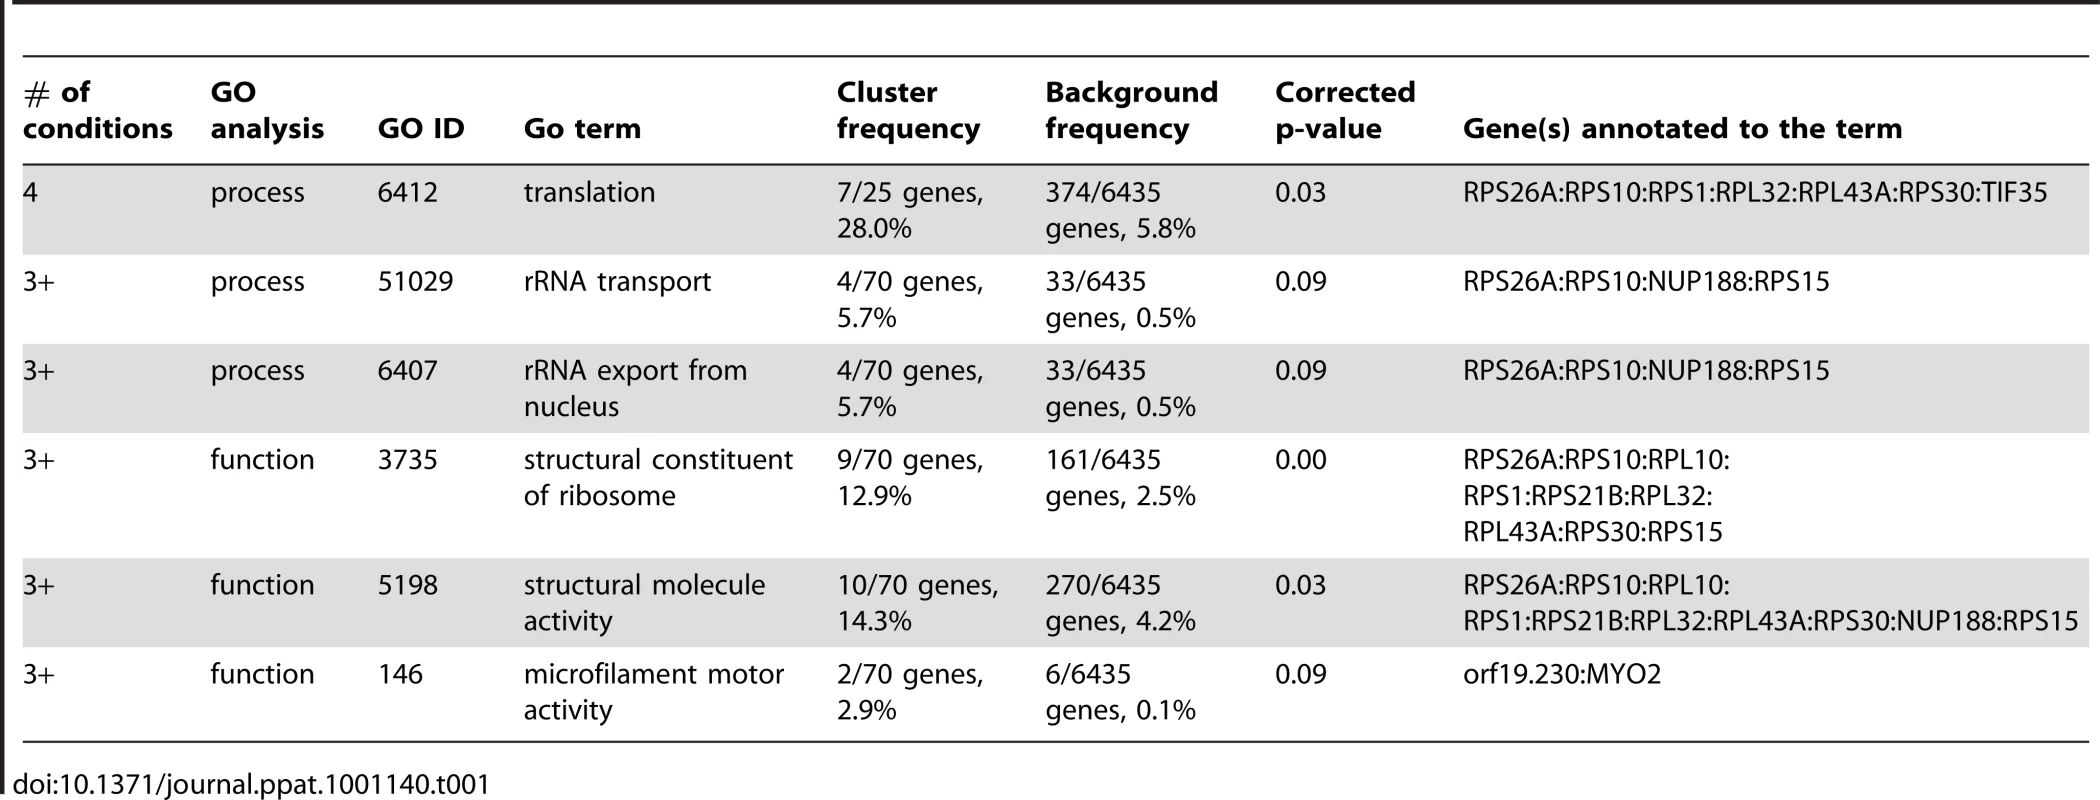 GO analysis of genes haploinsufficient in 3 or more media types.